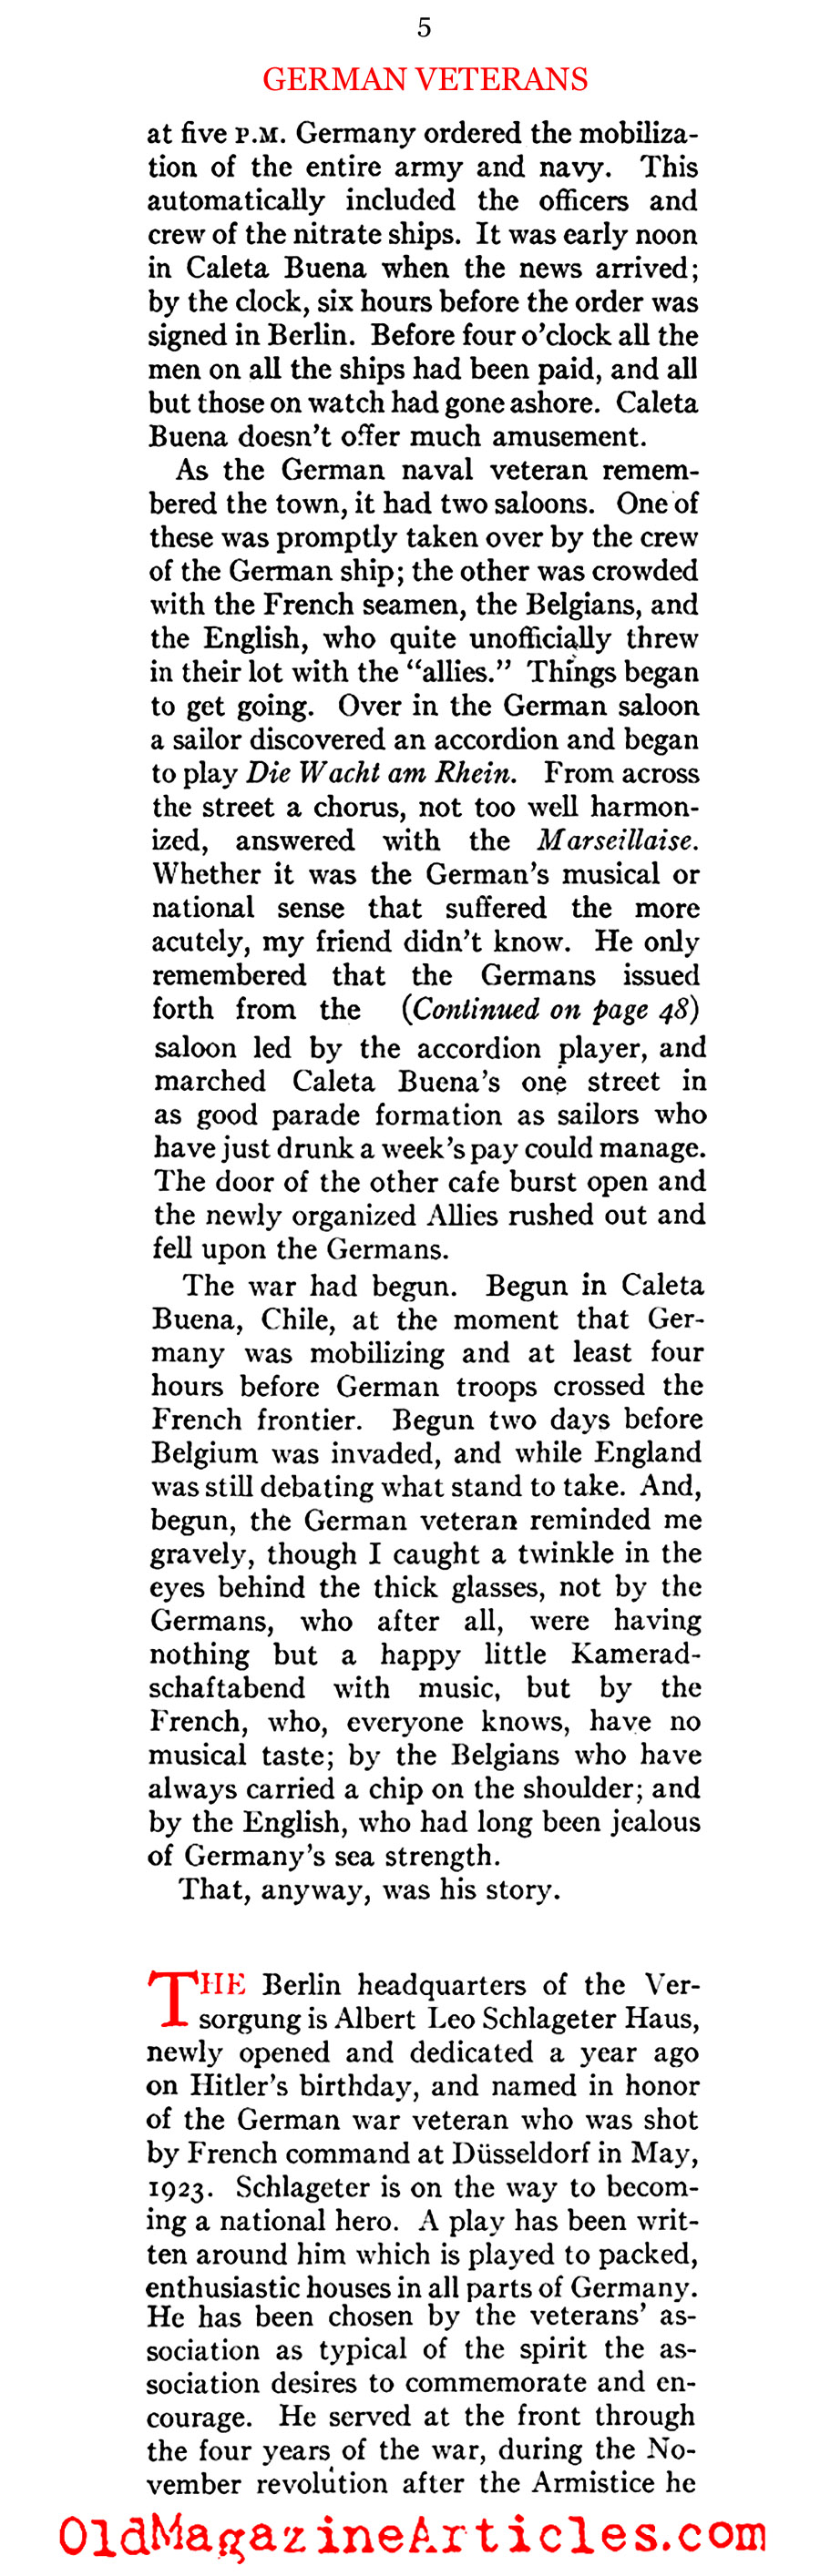 German Veterans of the War (American Legion Monthly, 1934)